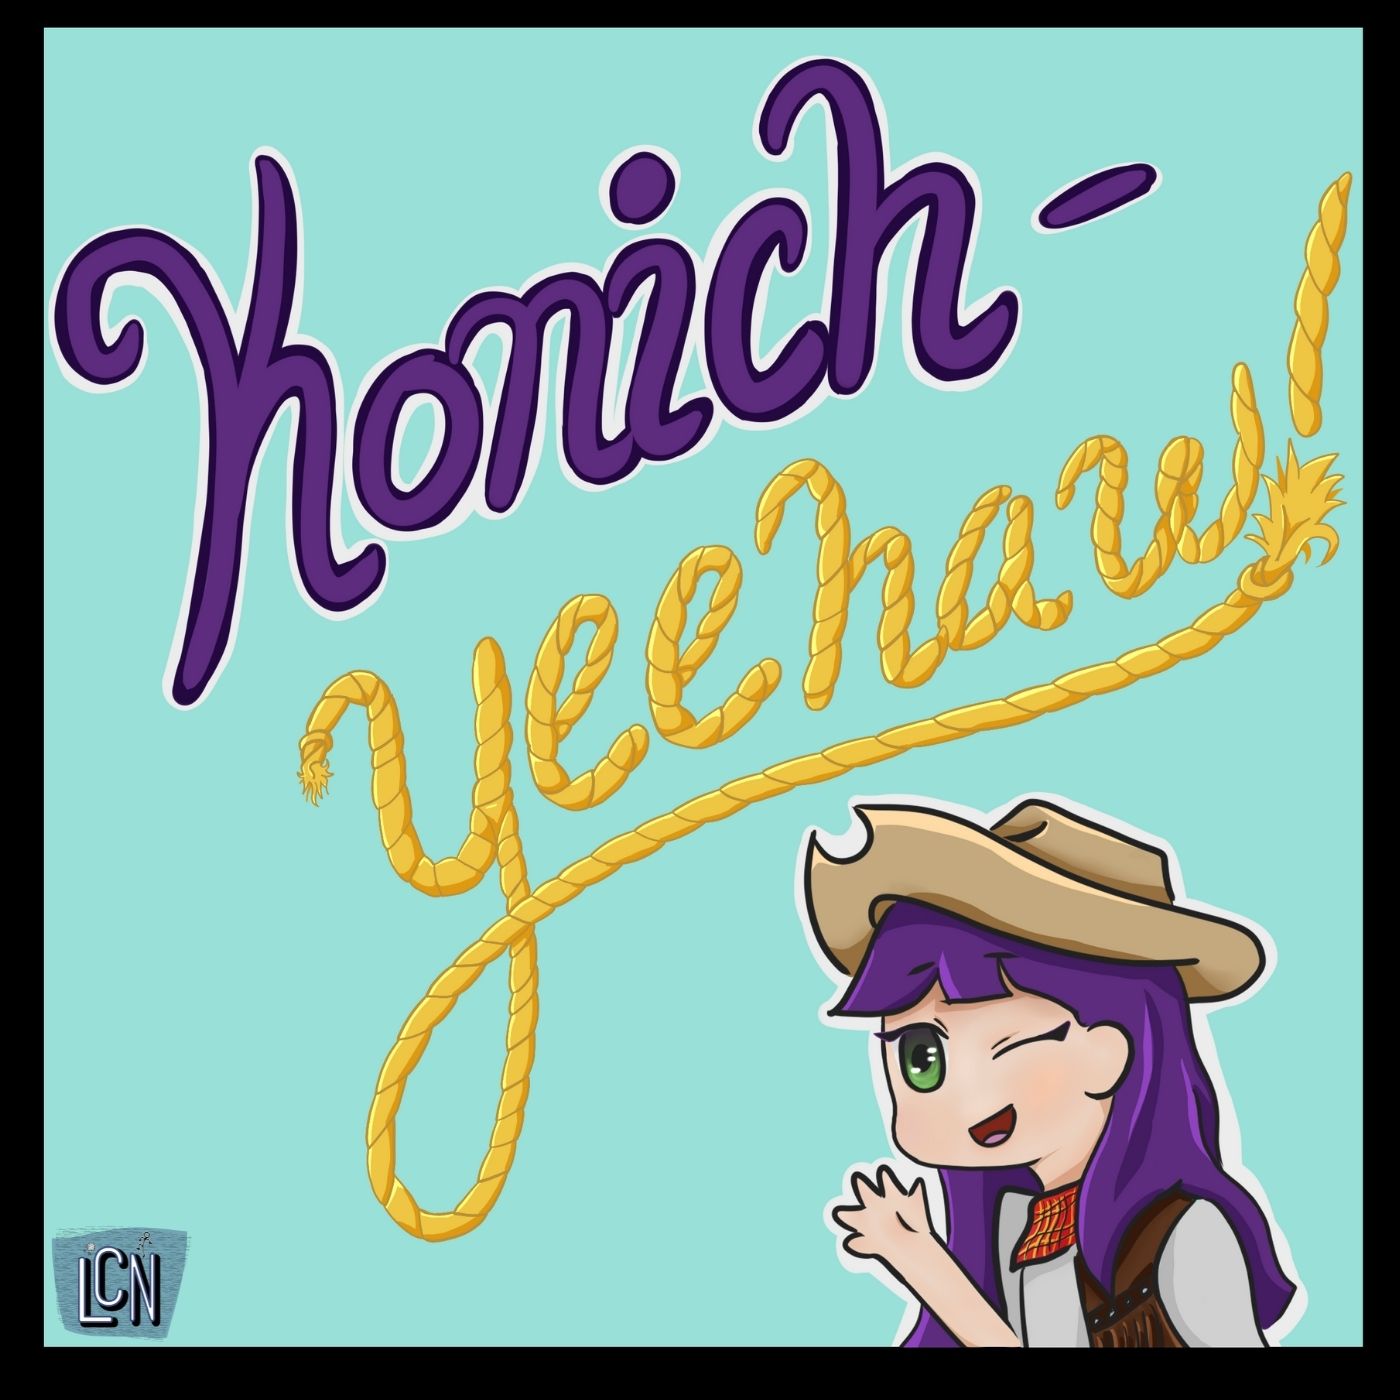 Konich-Yeehaw!